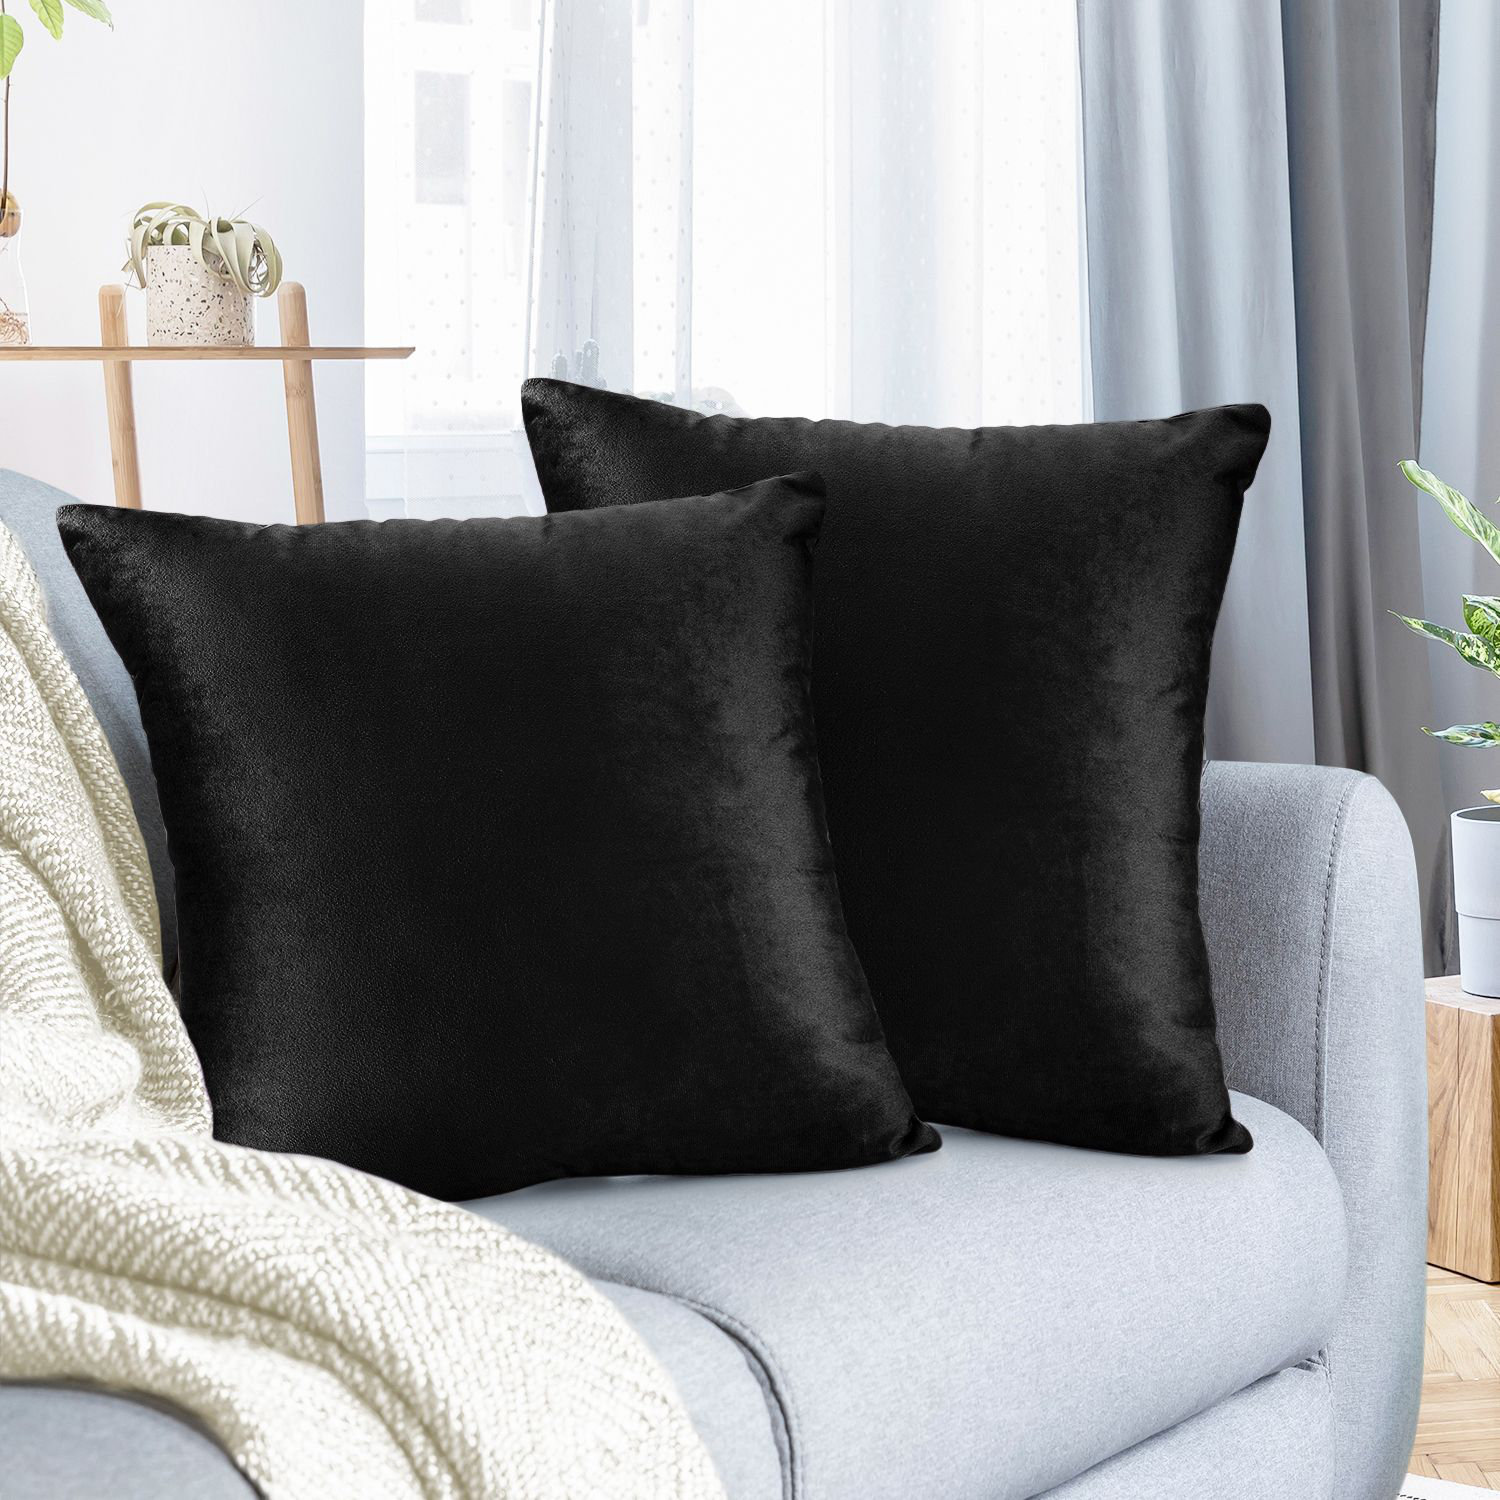 Soft Fur Plush Square Throw Pillow Cases Home Decor Sofa Waist Cushion Cover UK 